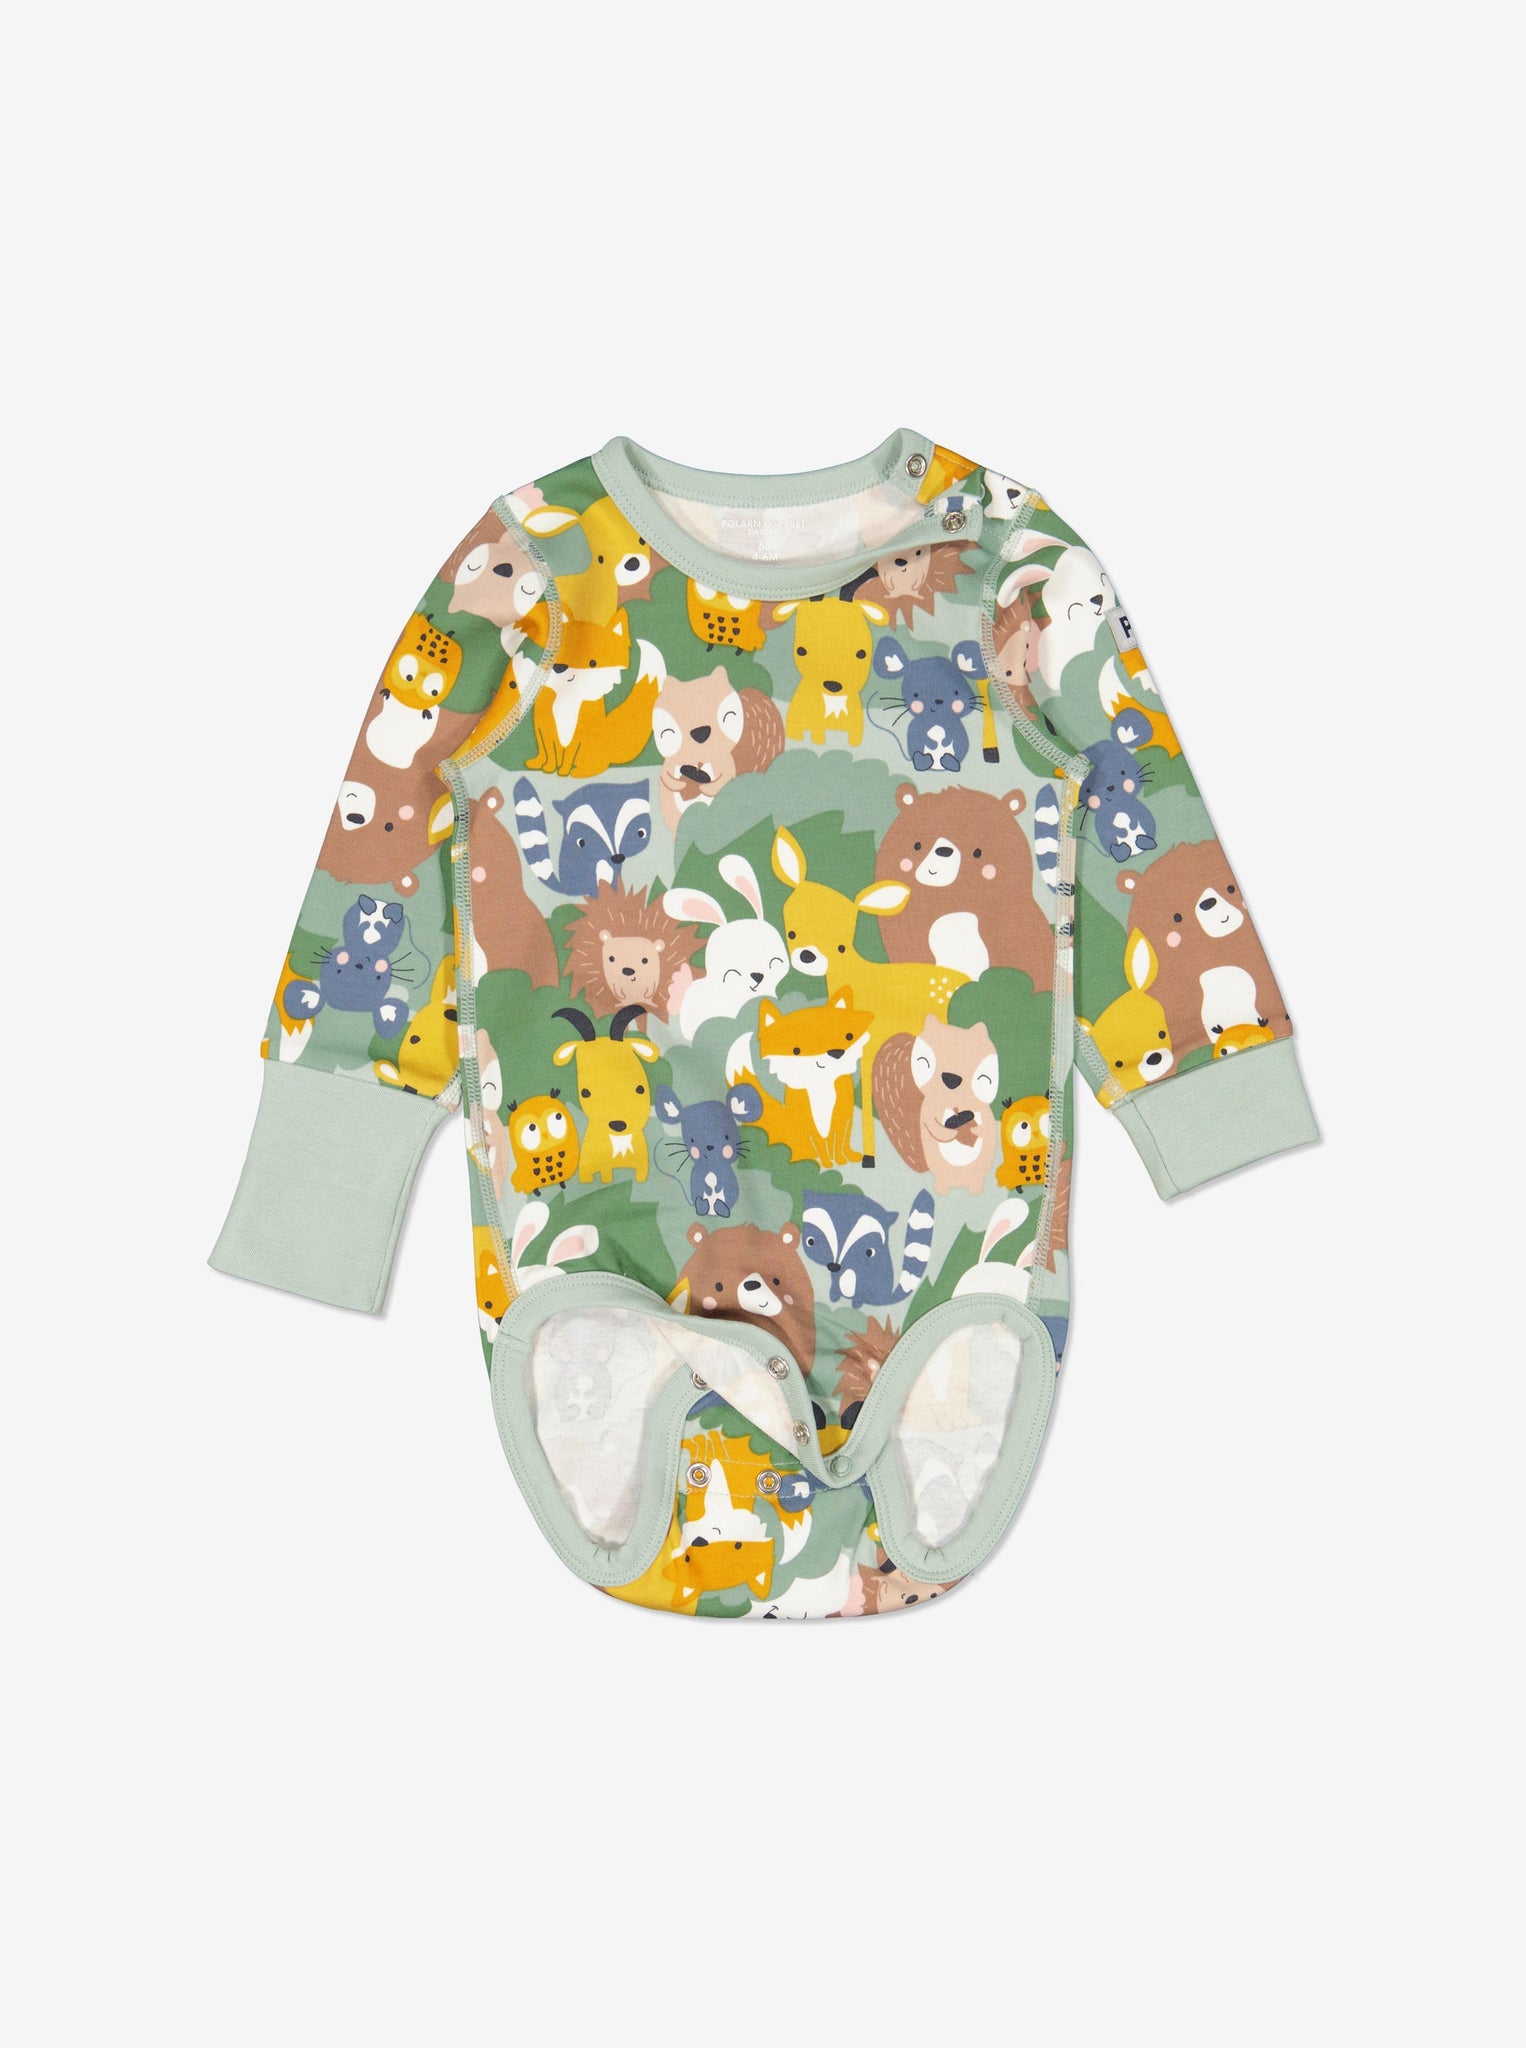  Nordic Animal Newborn Babygrow from Polarn O. Pyret Kidswear. Made using eco-friendly materials.